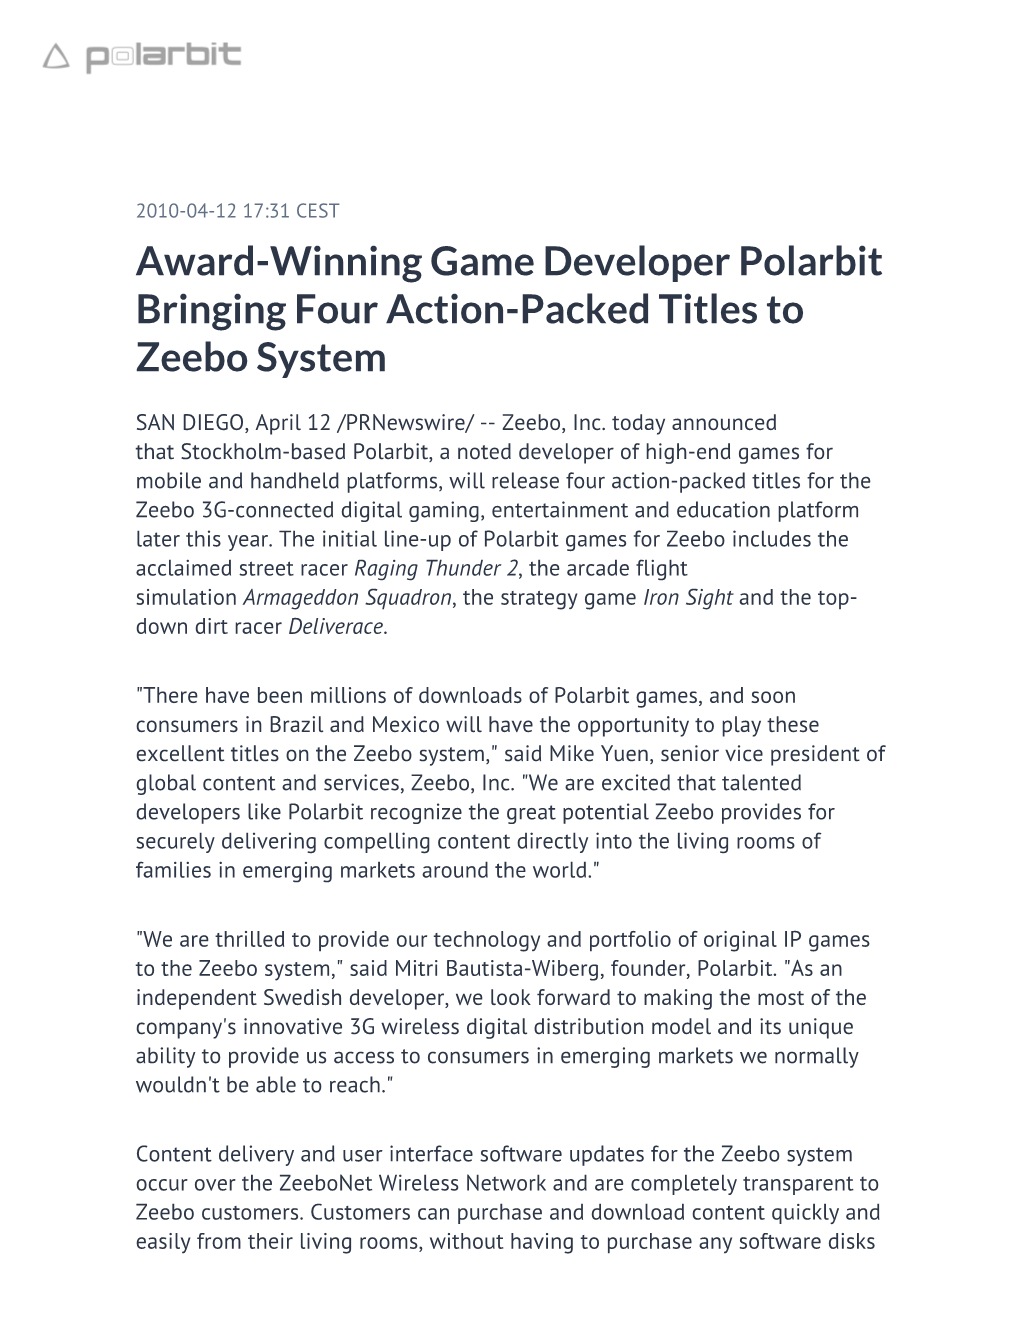 Award-Winning Game Developer Polarbit Bringing Four Action-Packed Titles to Zeebo System